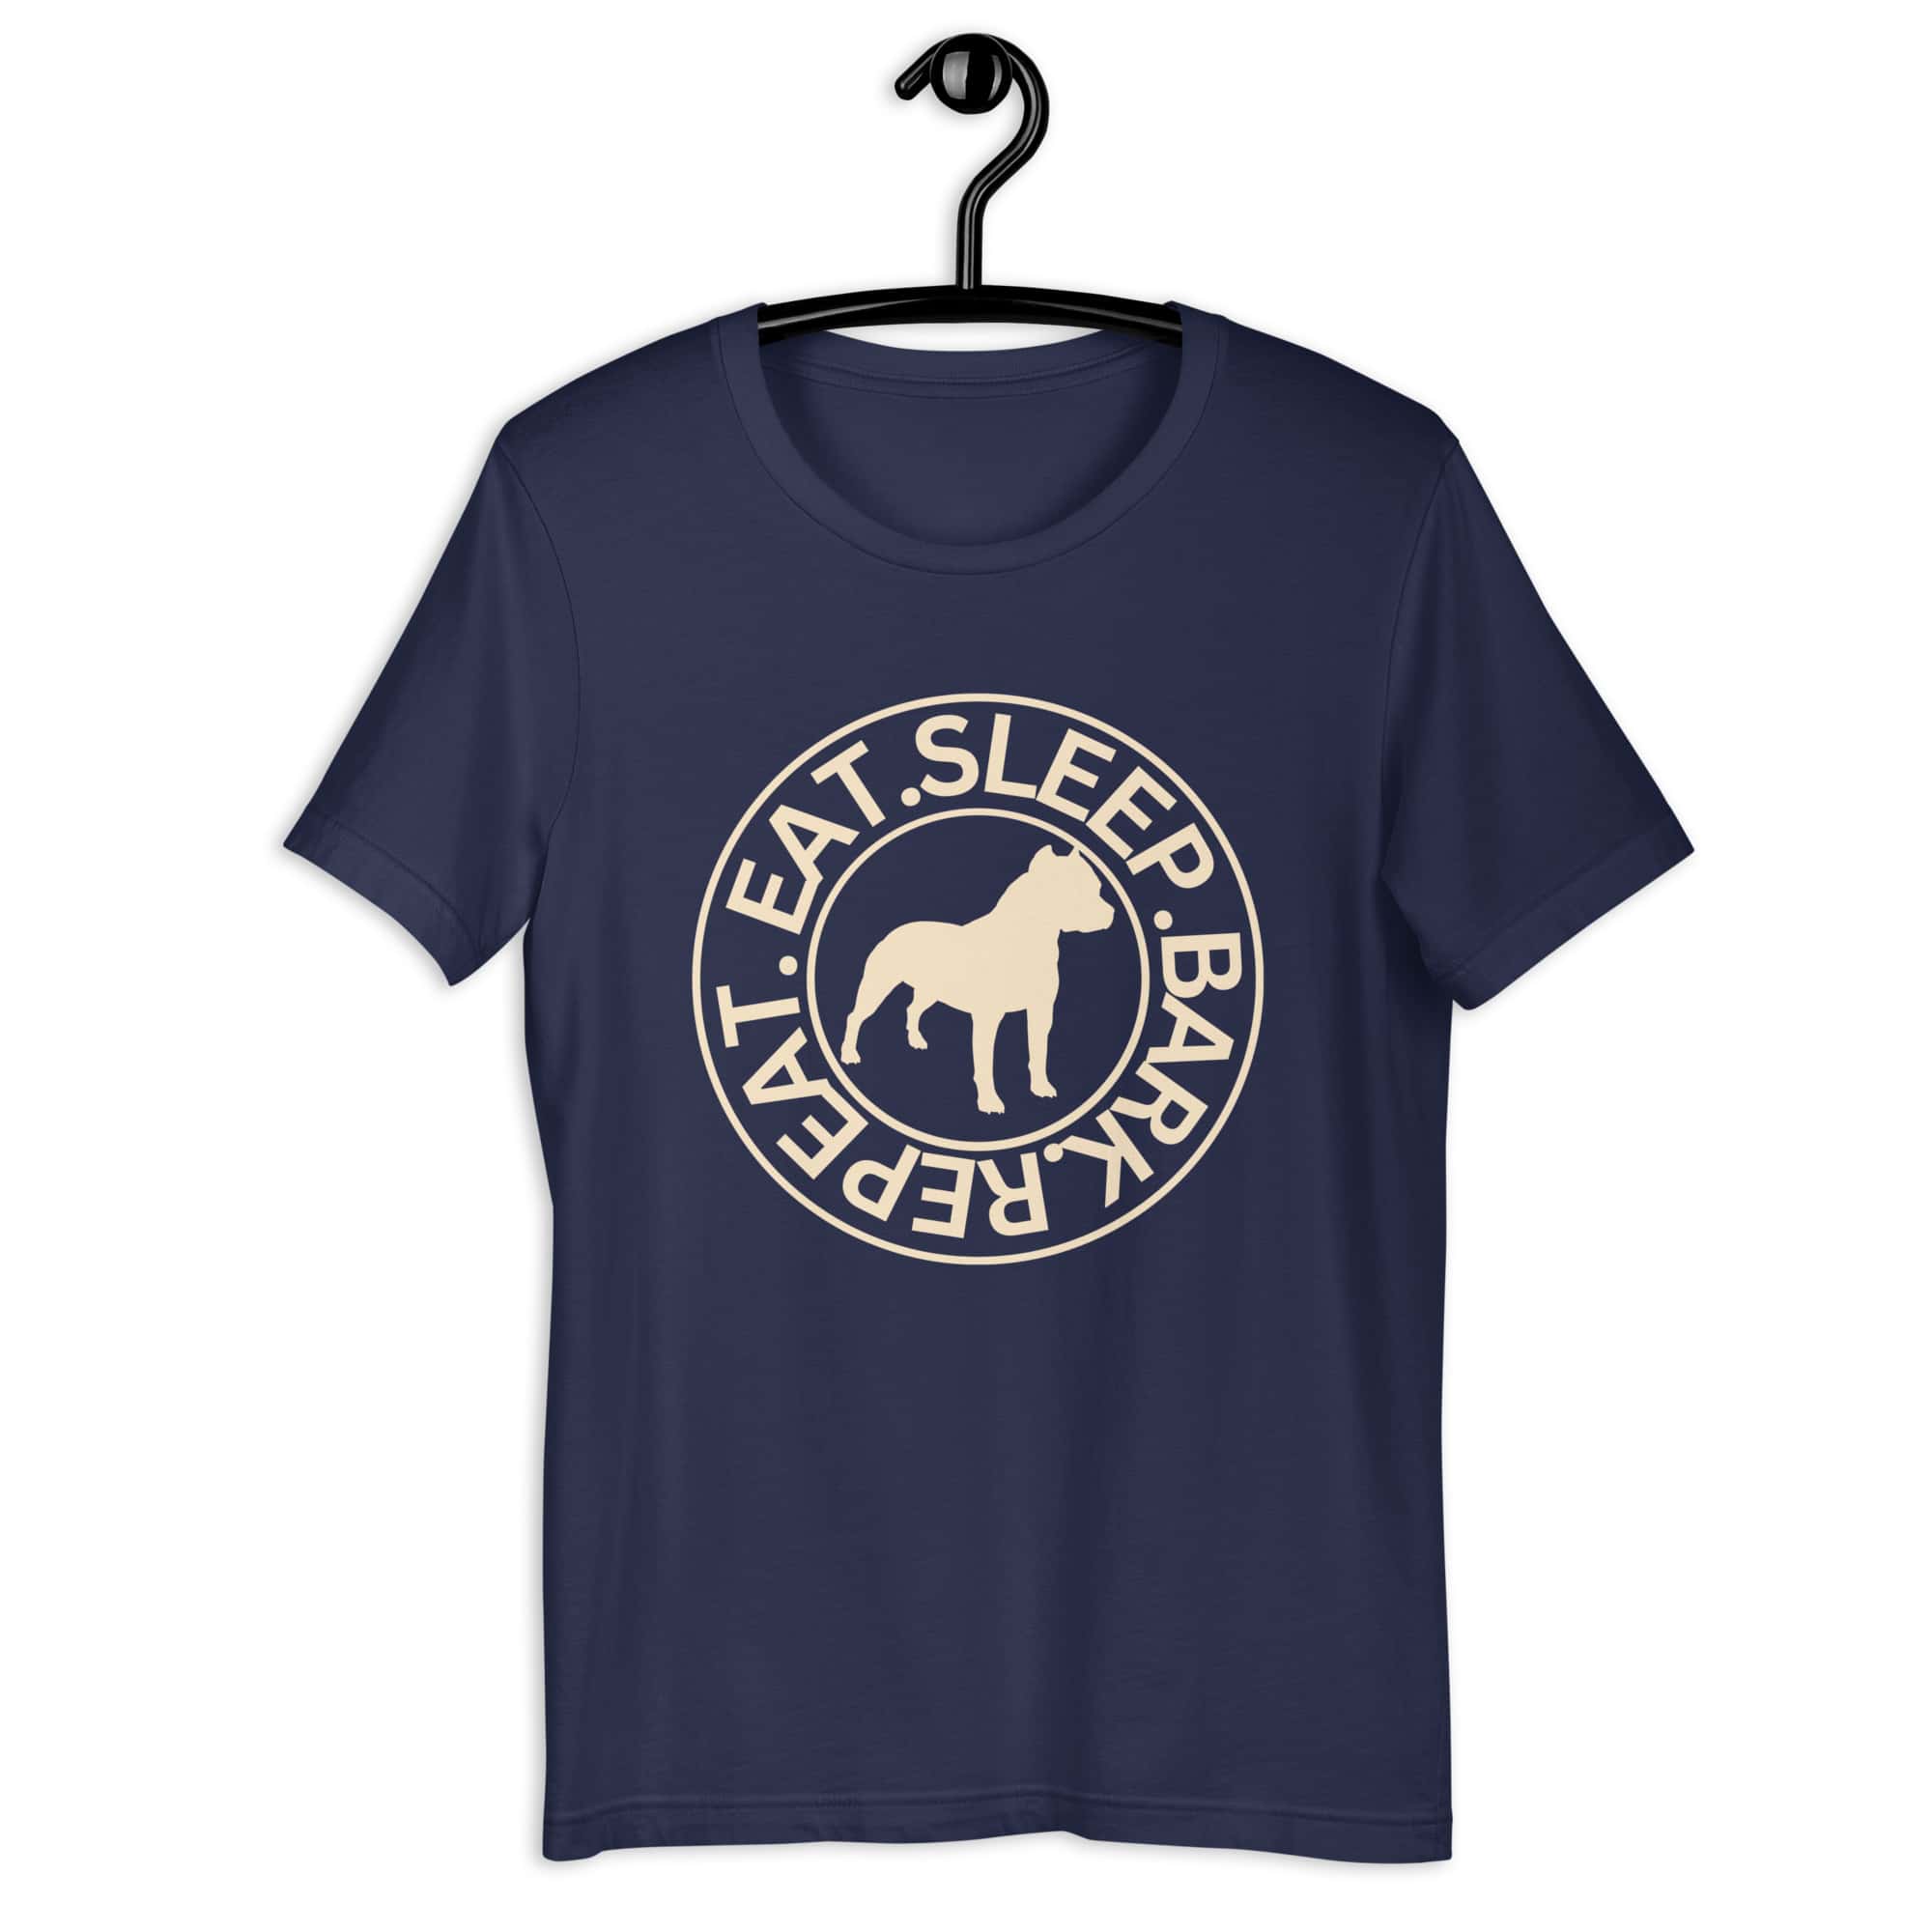 Eat Sleep Bark Repeat Toy Bulldog Unisex T-Shirt. Navy